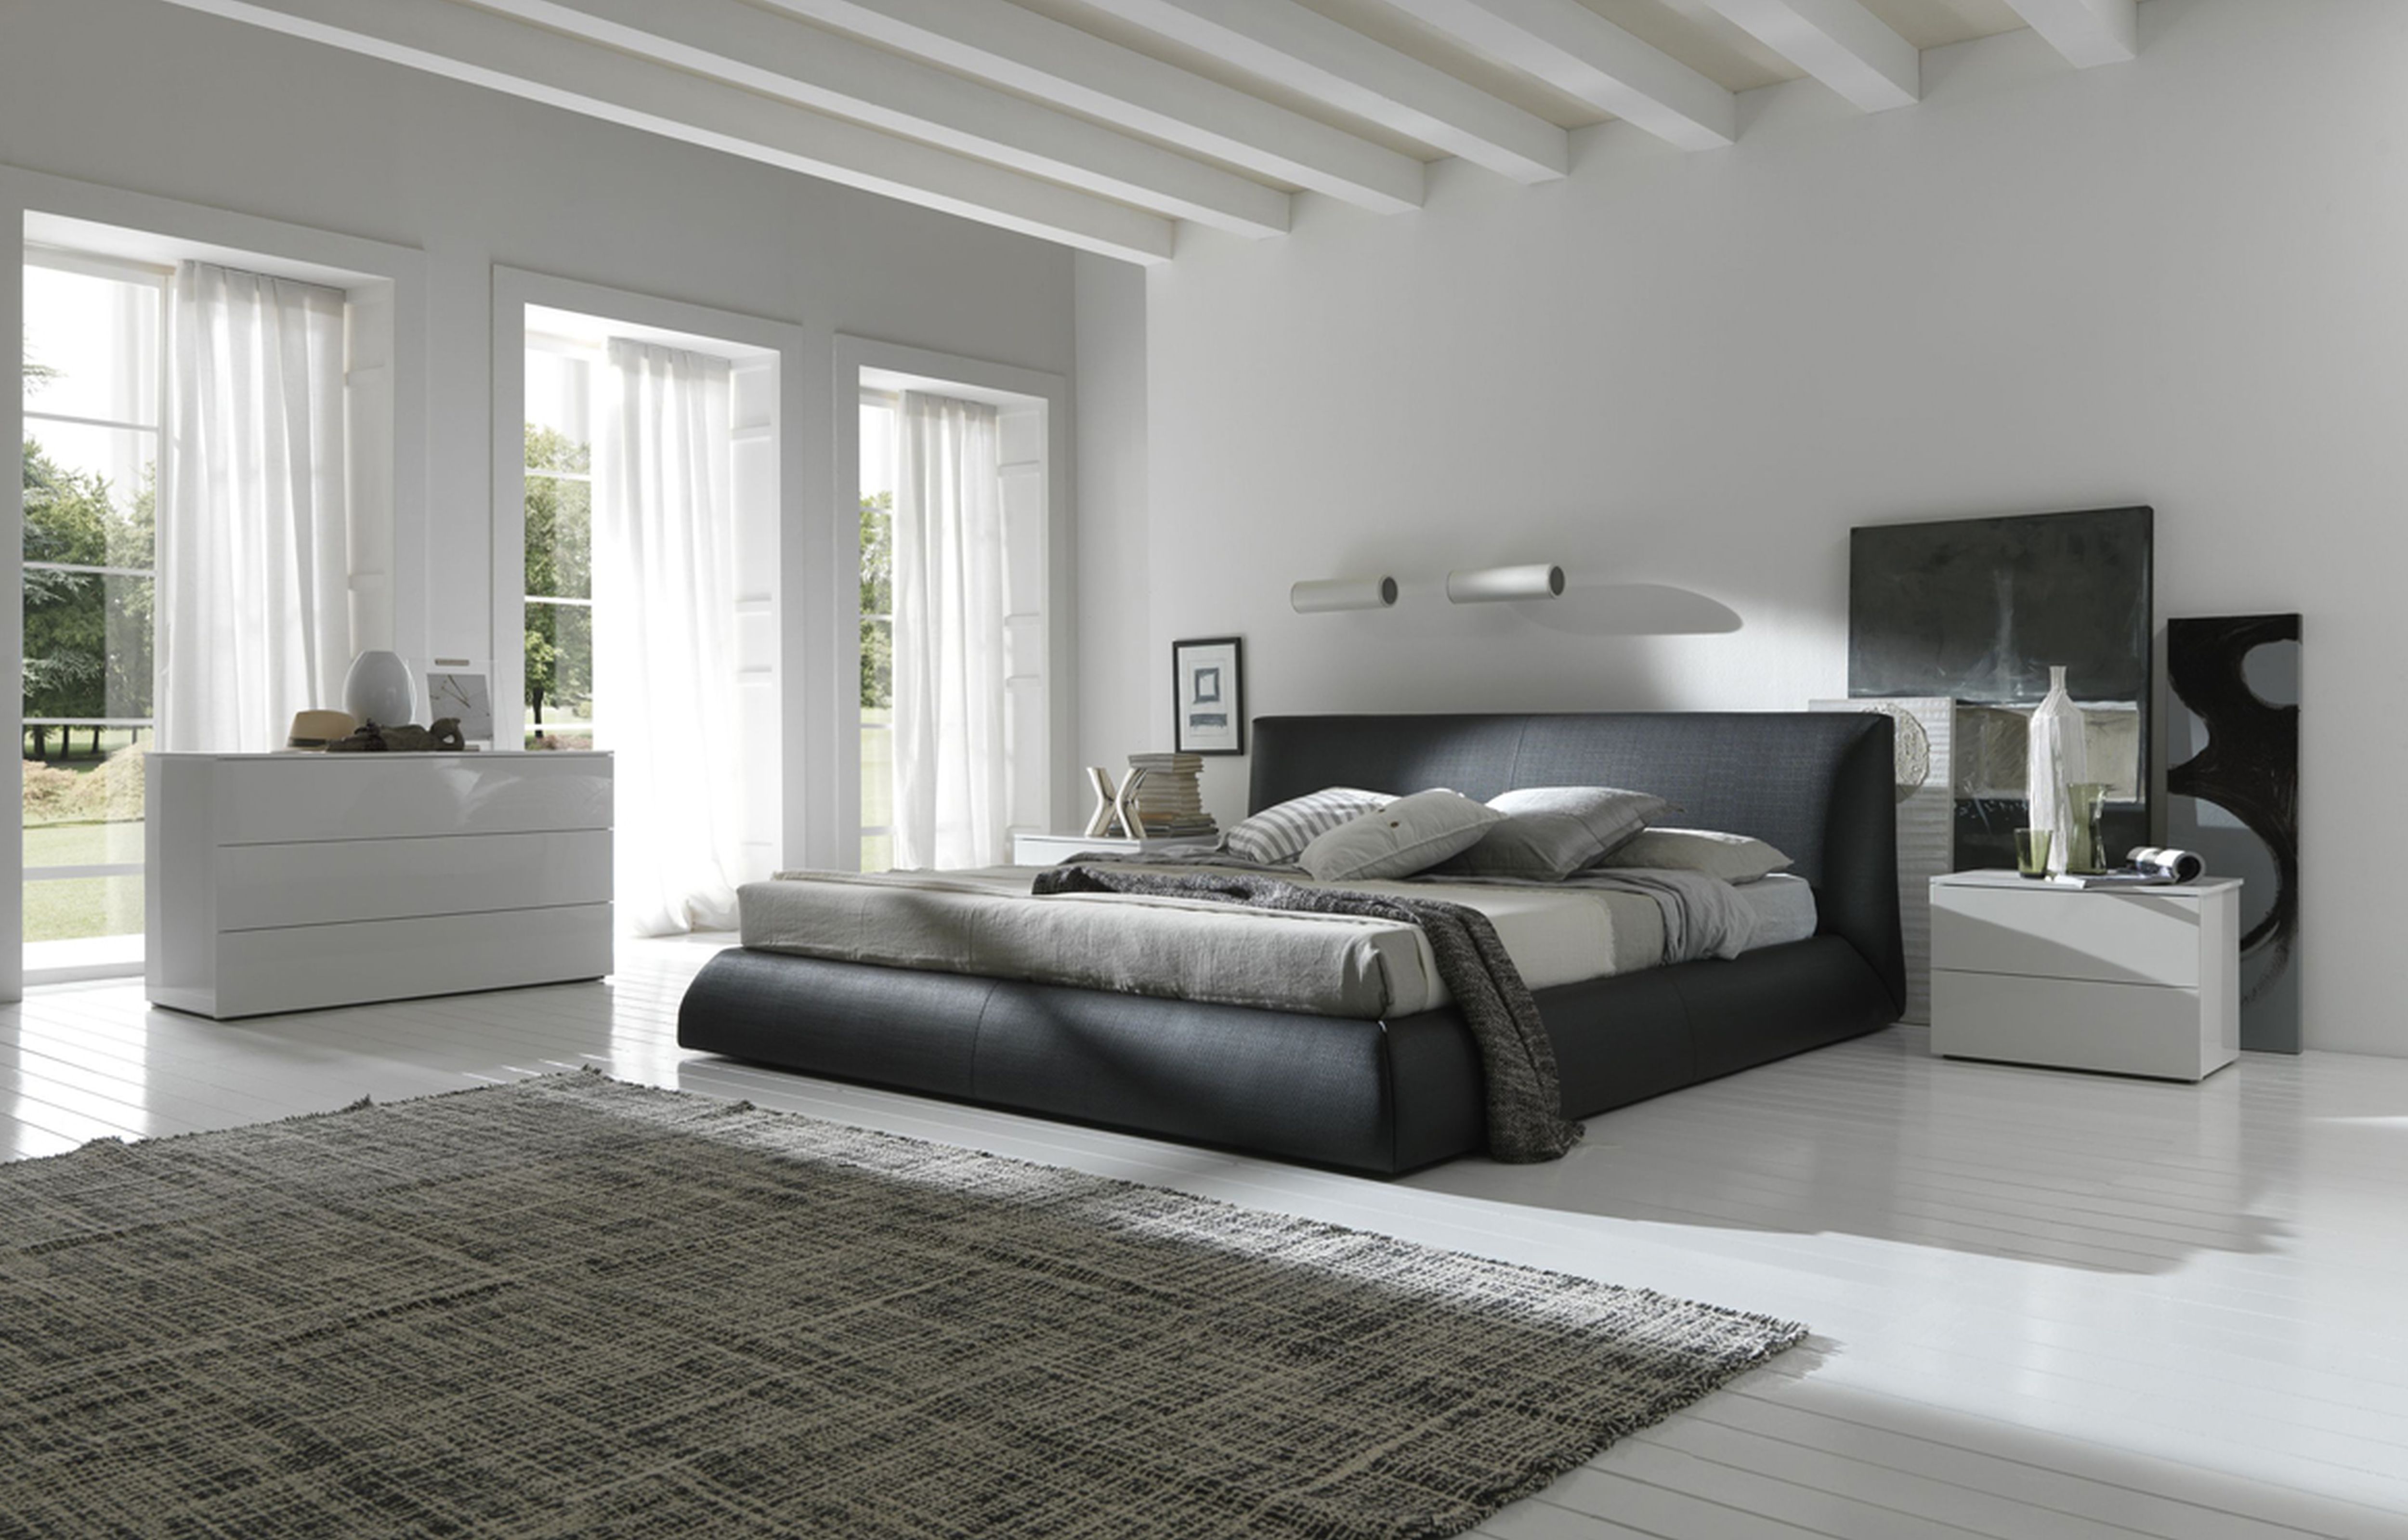 Modern Style Bedroom Decor